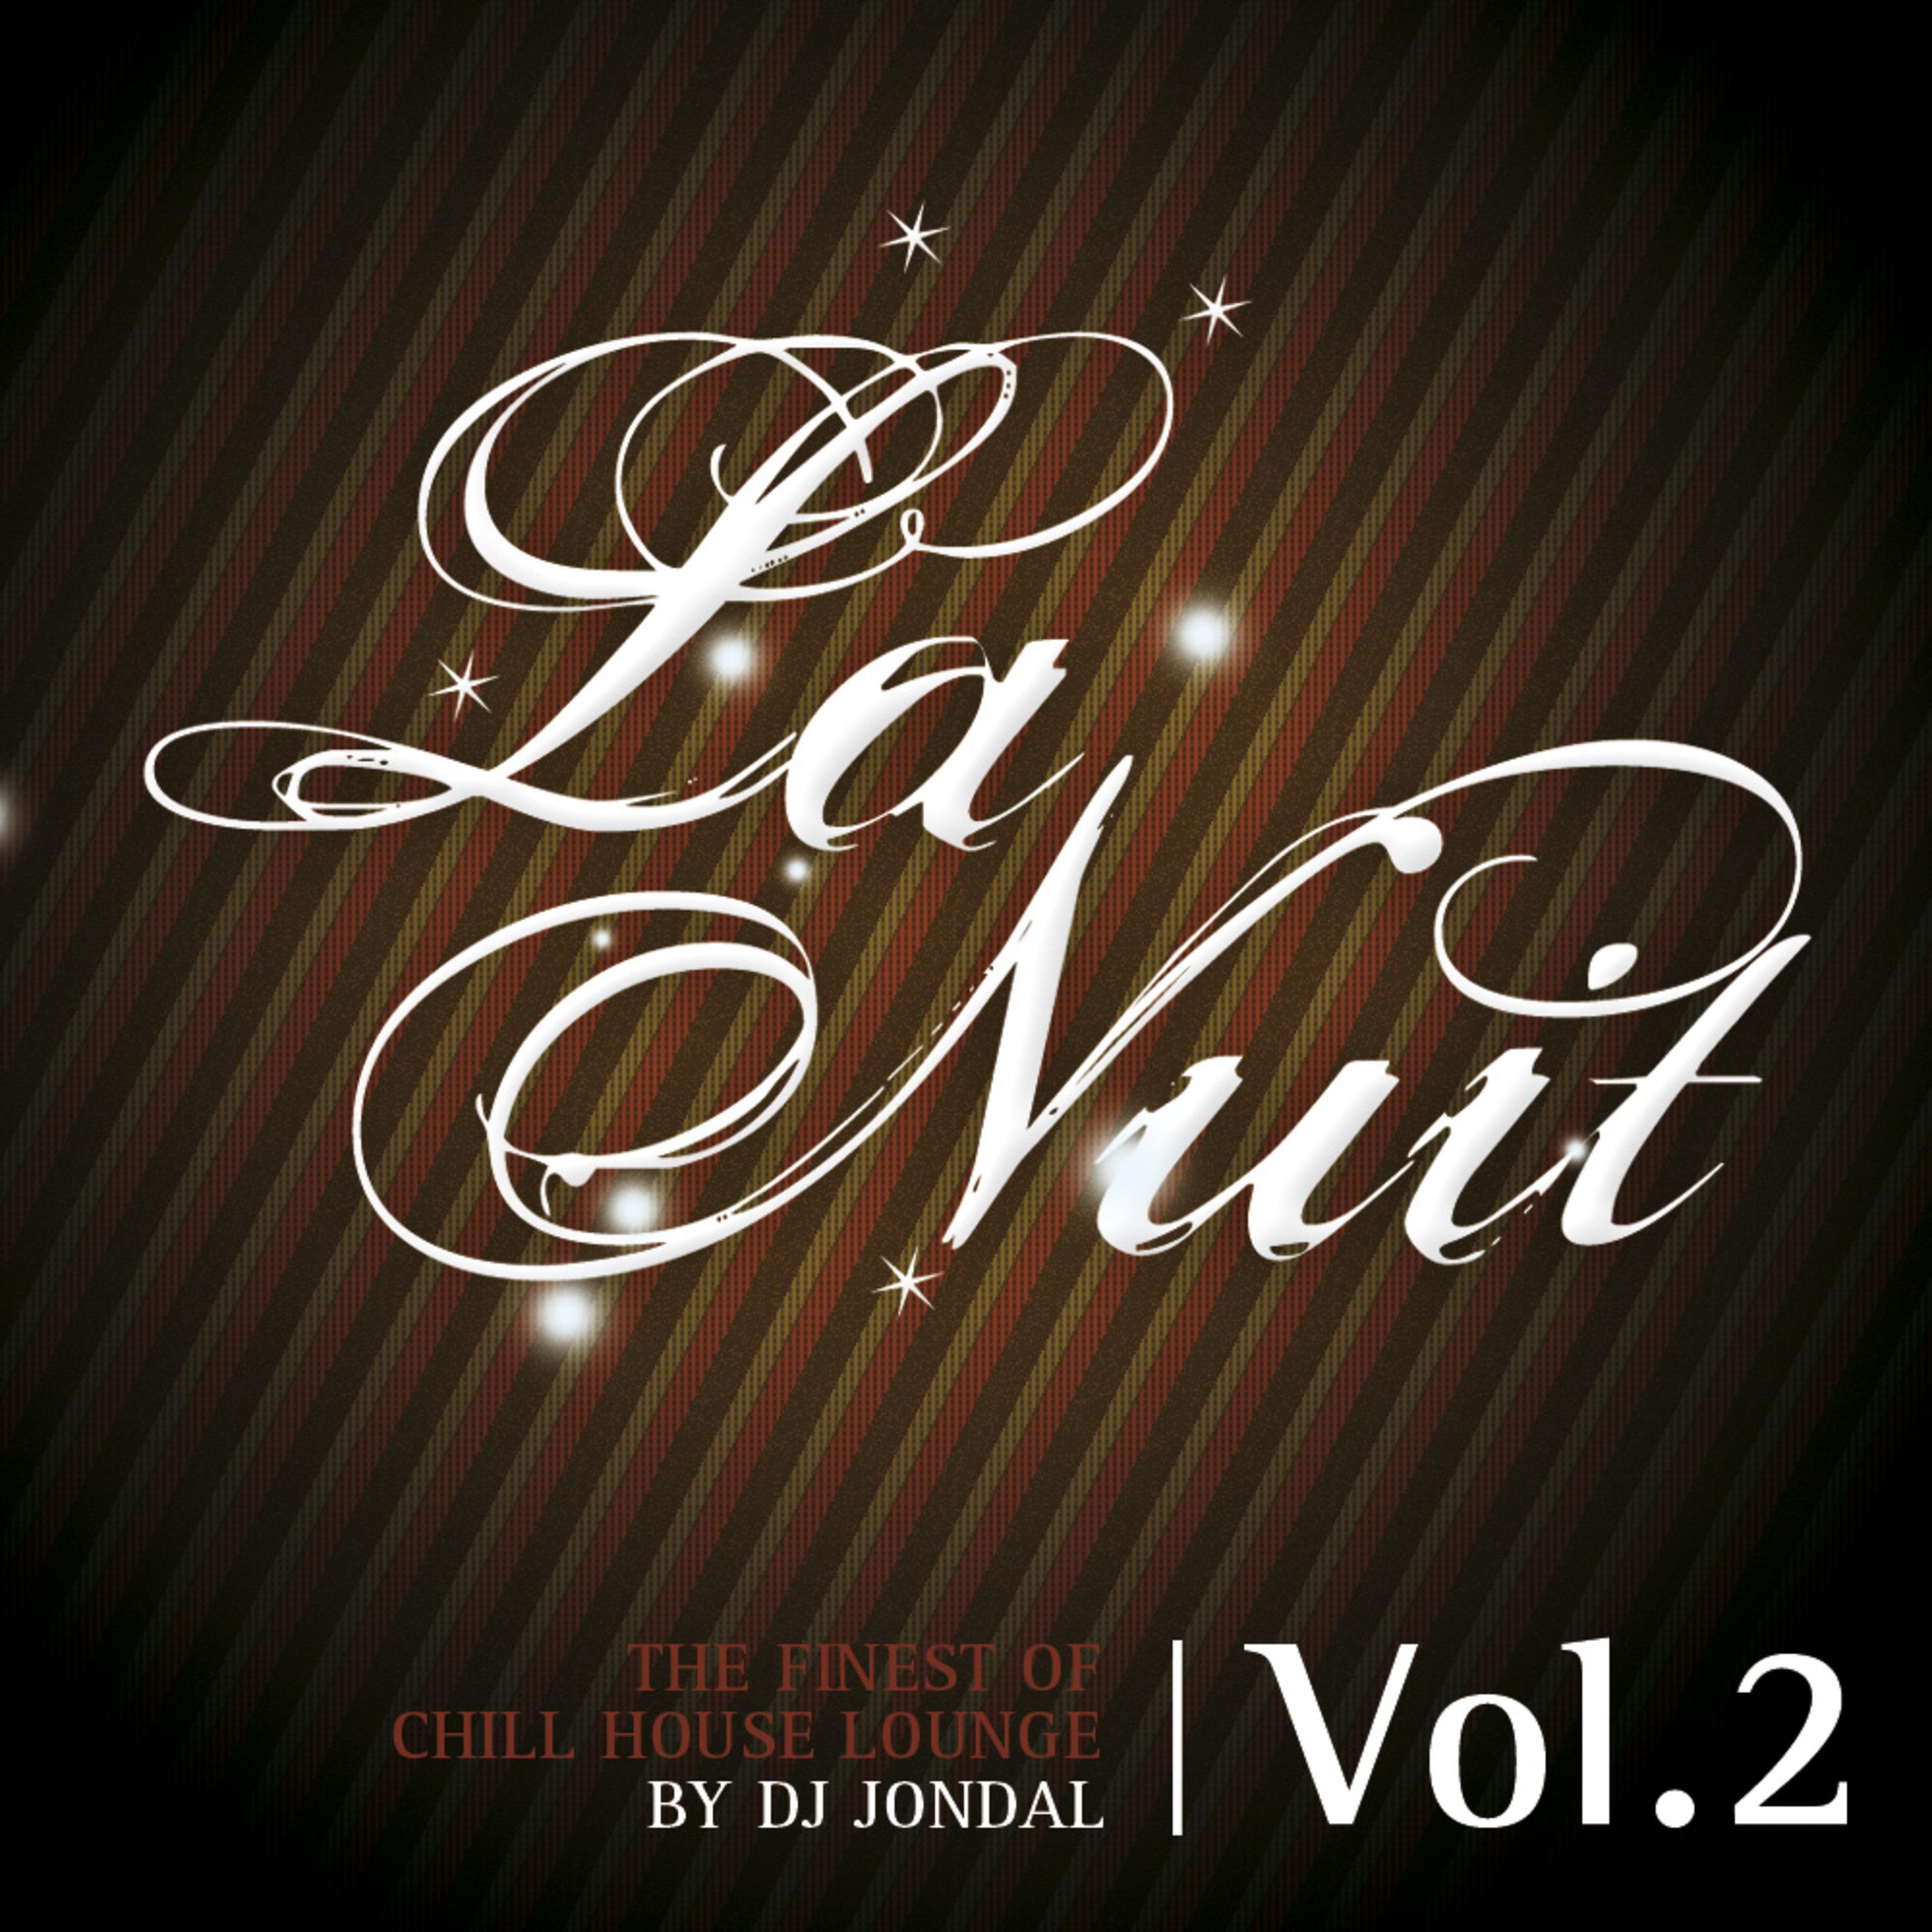 La Nuit (The Finest of Chill House Lounge by DJ Jondal - Vol. 2)